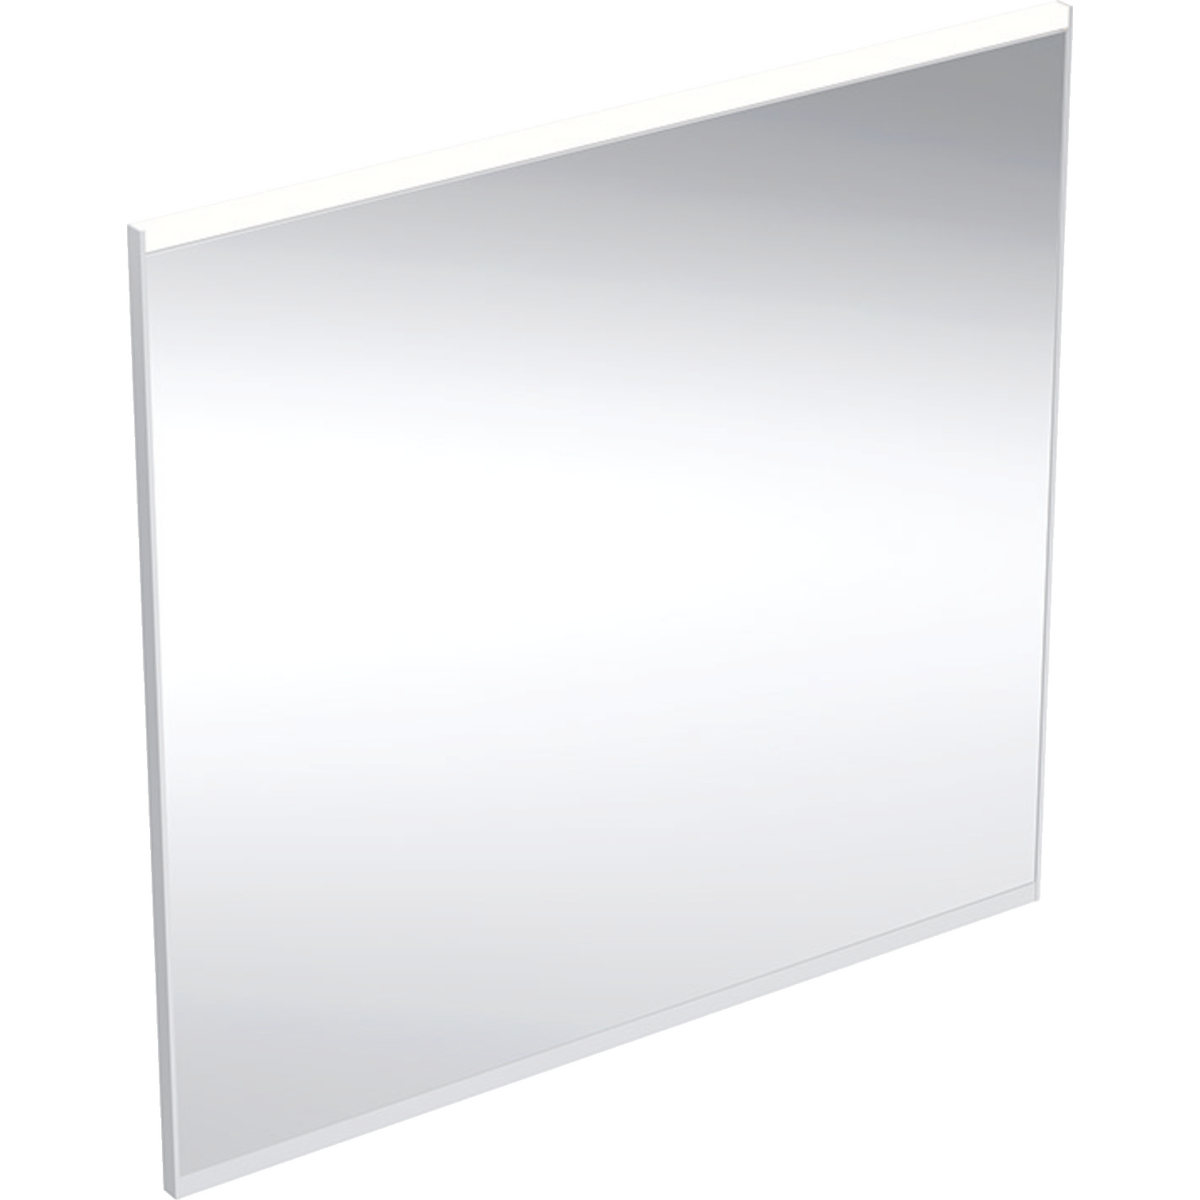 Option Plus Square illuminated mirror with lighting - 750mm